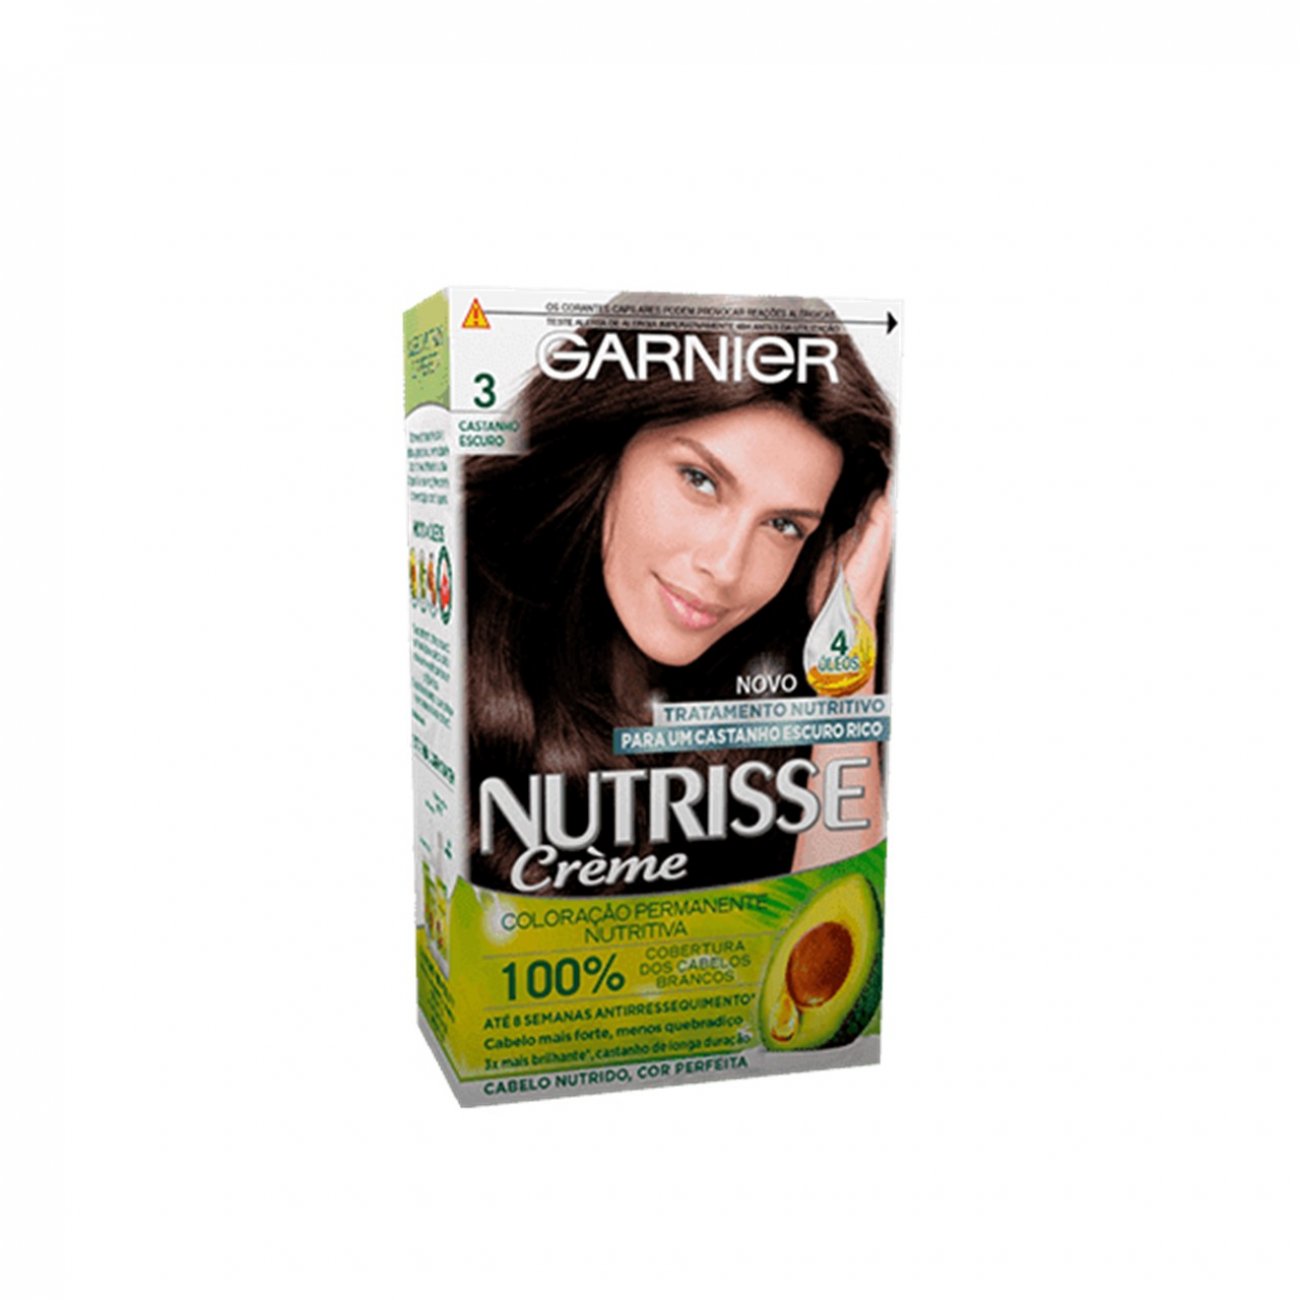 Buy Garnier Nutrisse Crème 3 Darkest Brown Permanent Hair Dye · Indonesia